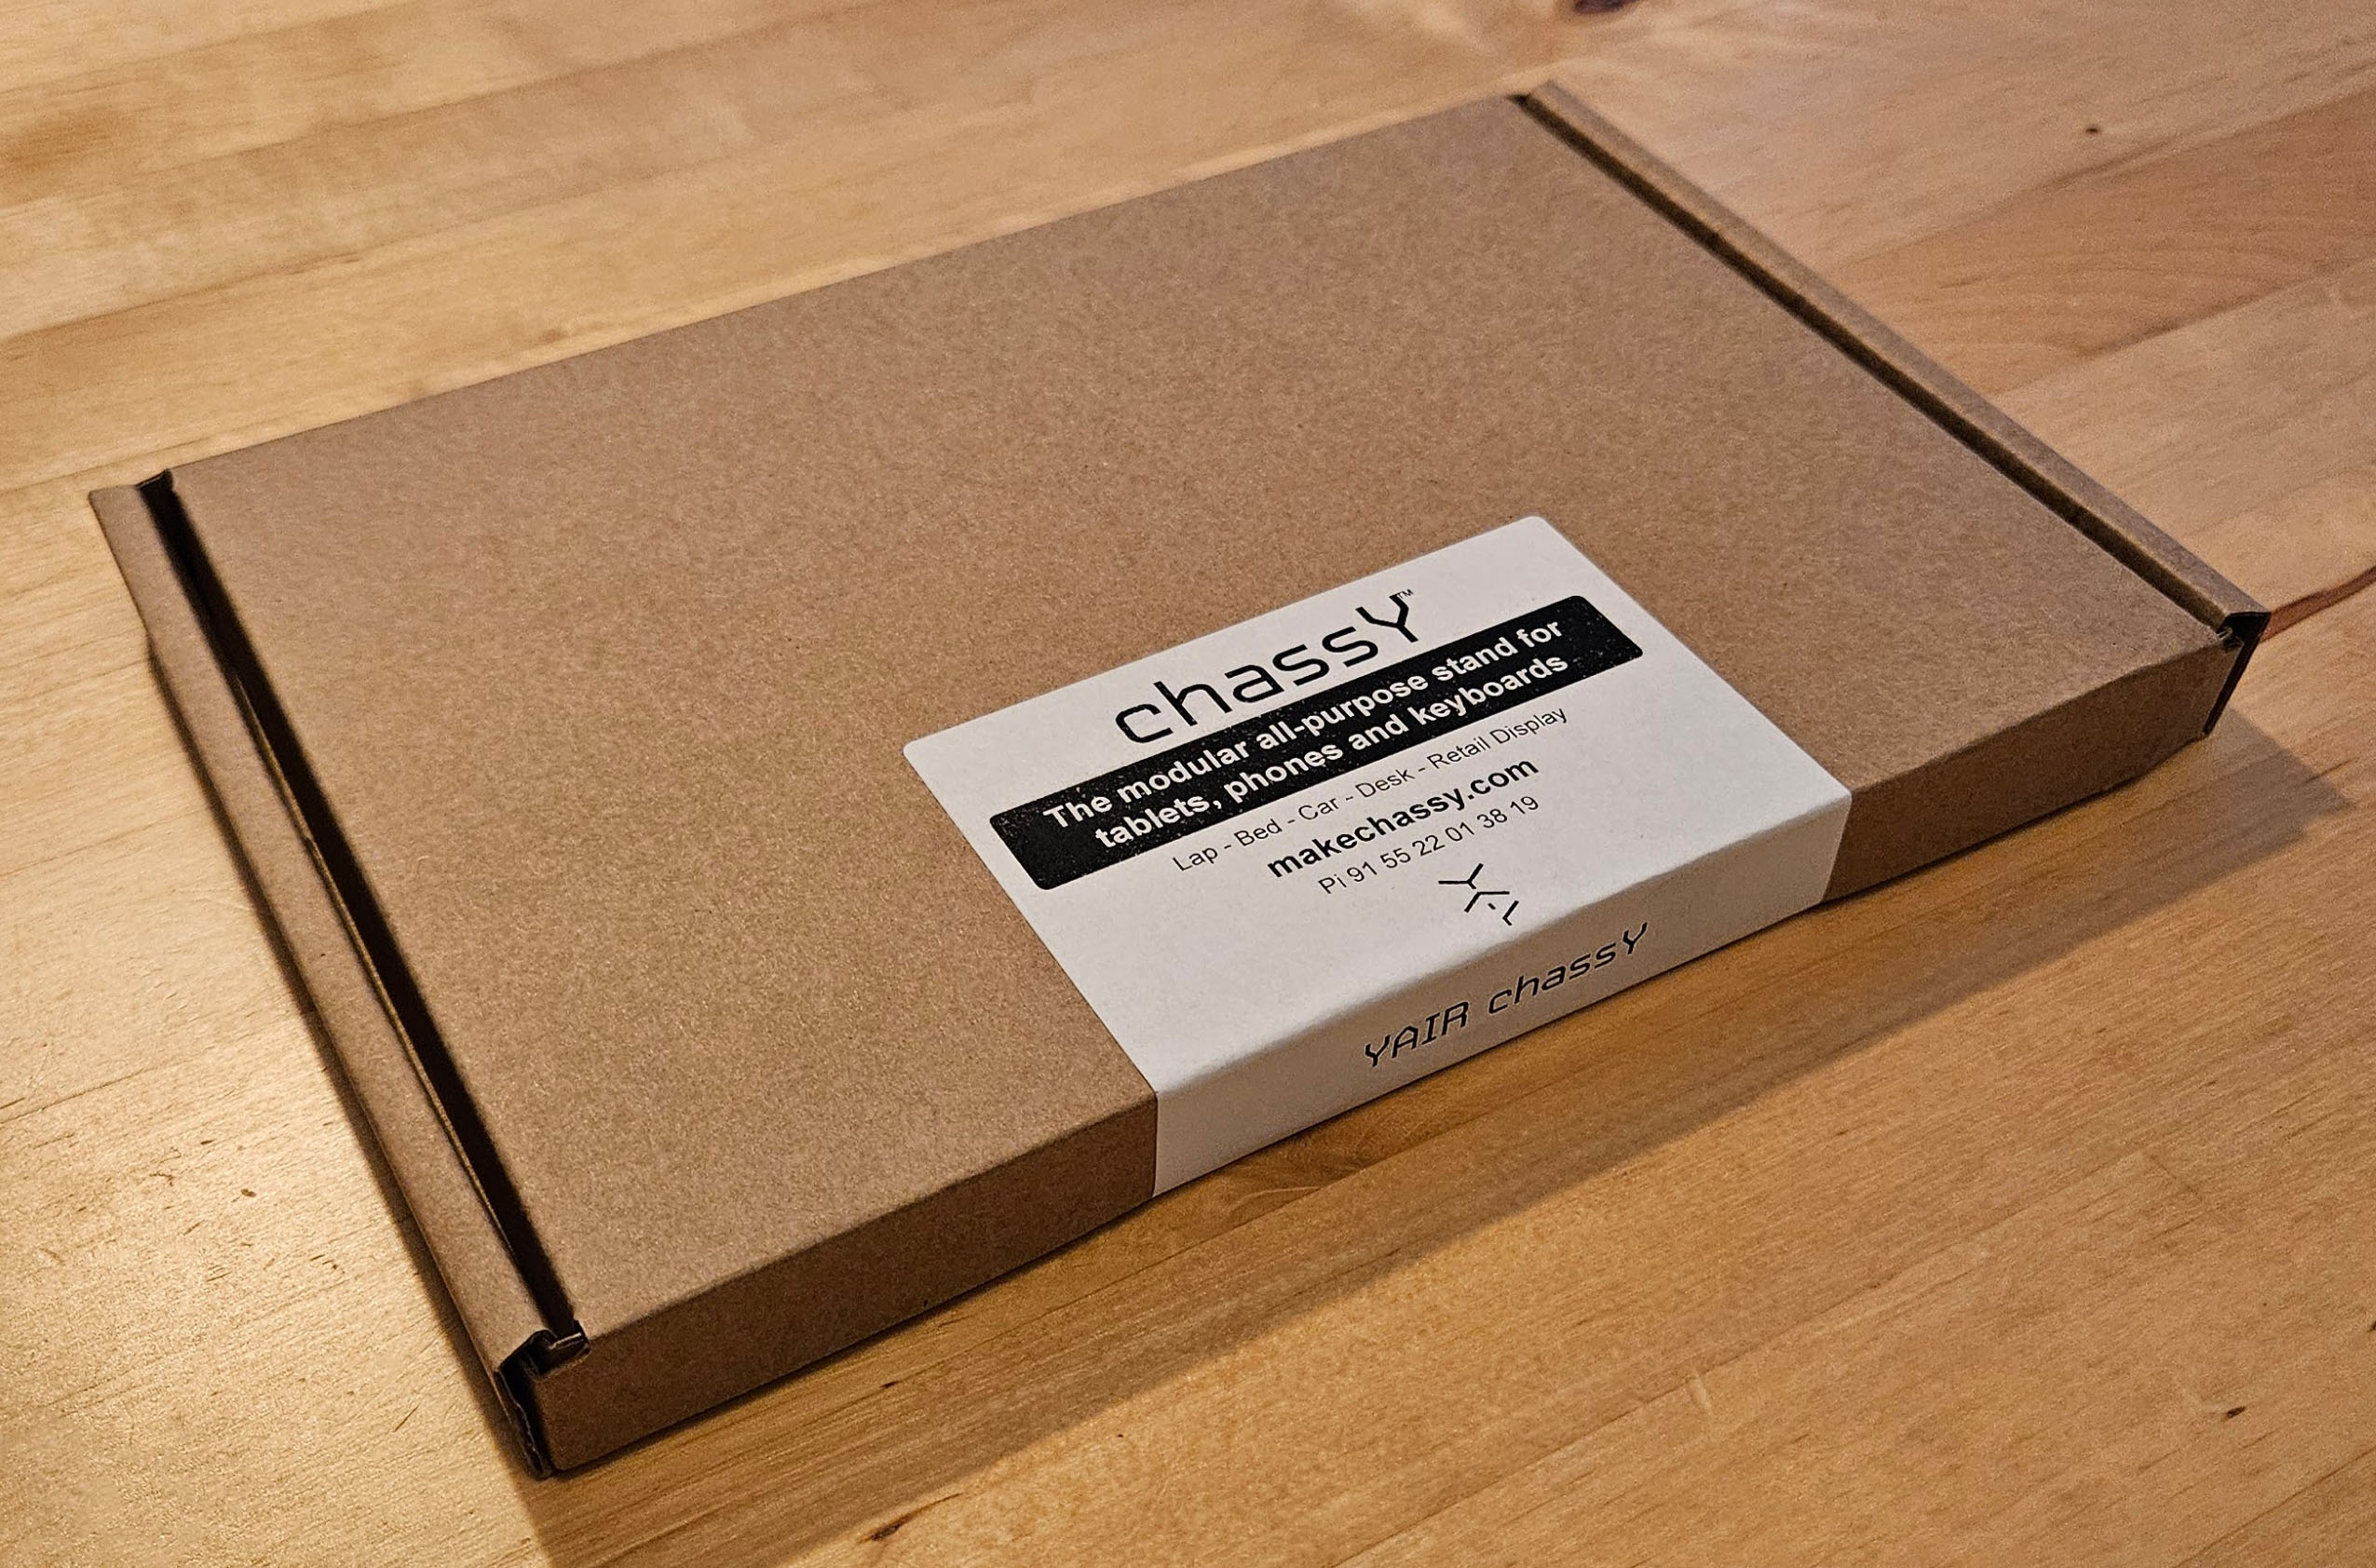 chassY shipping box